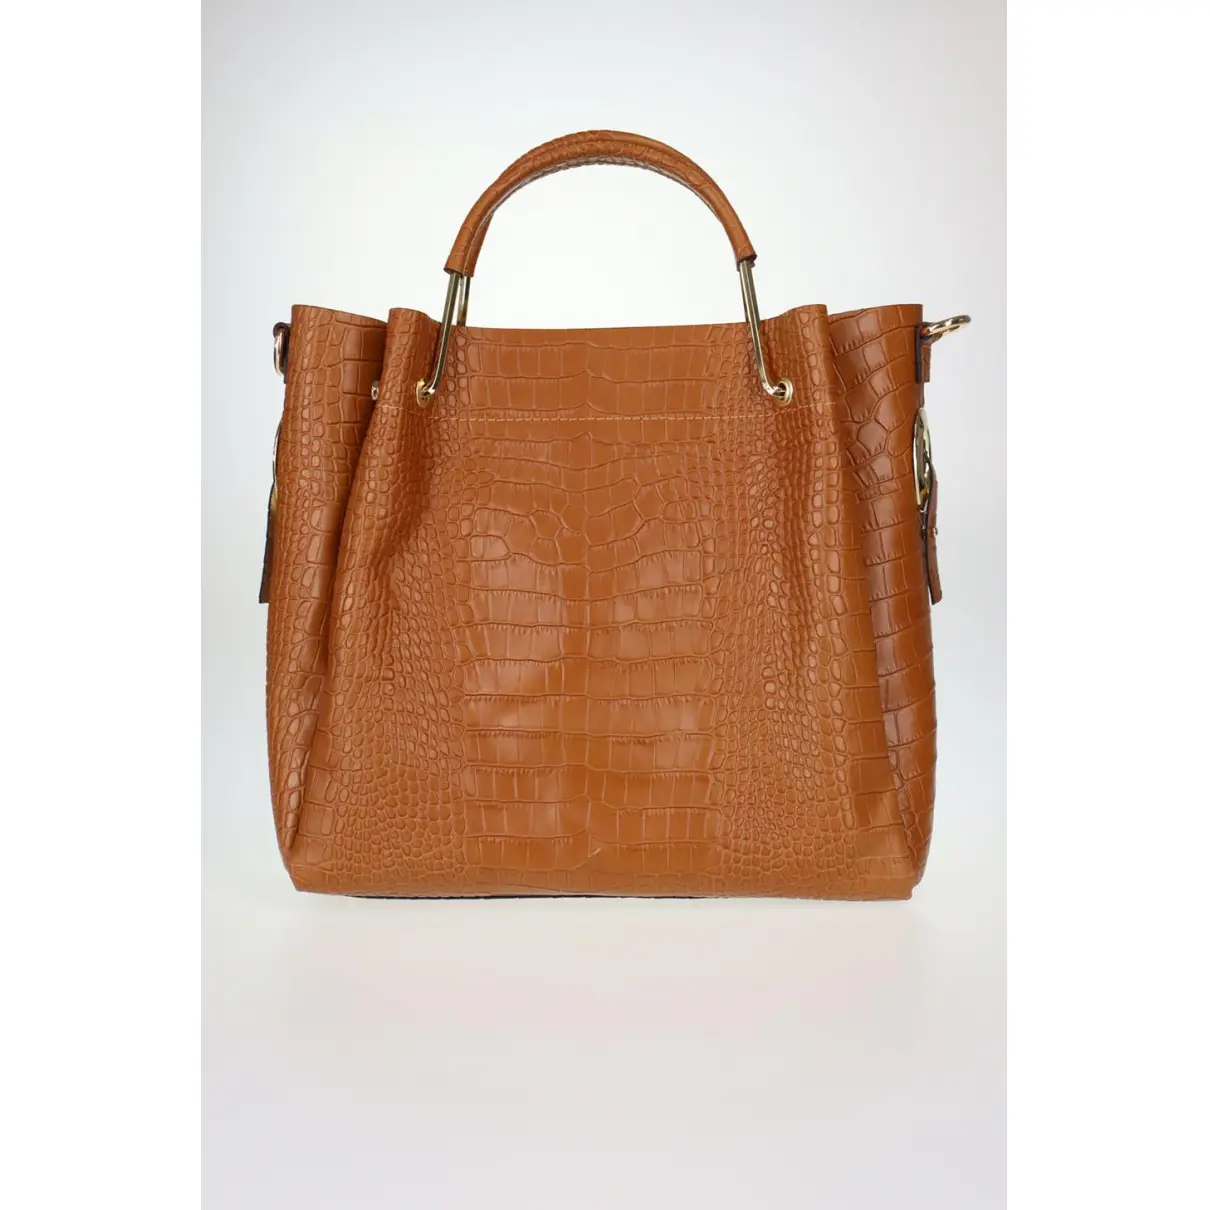 Buy Christian Laurier Leather handbag online